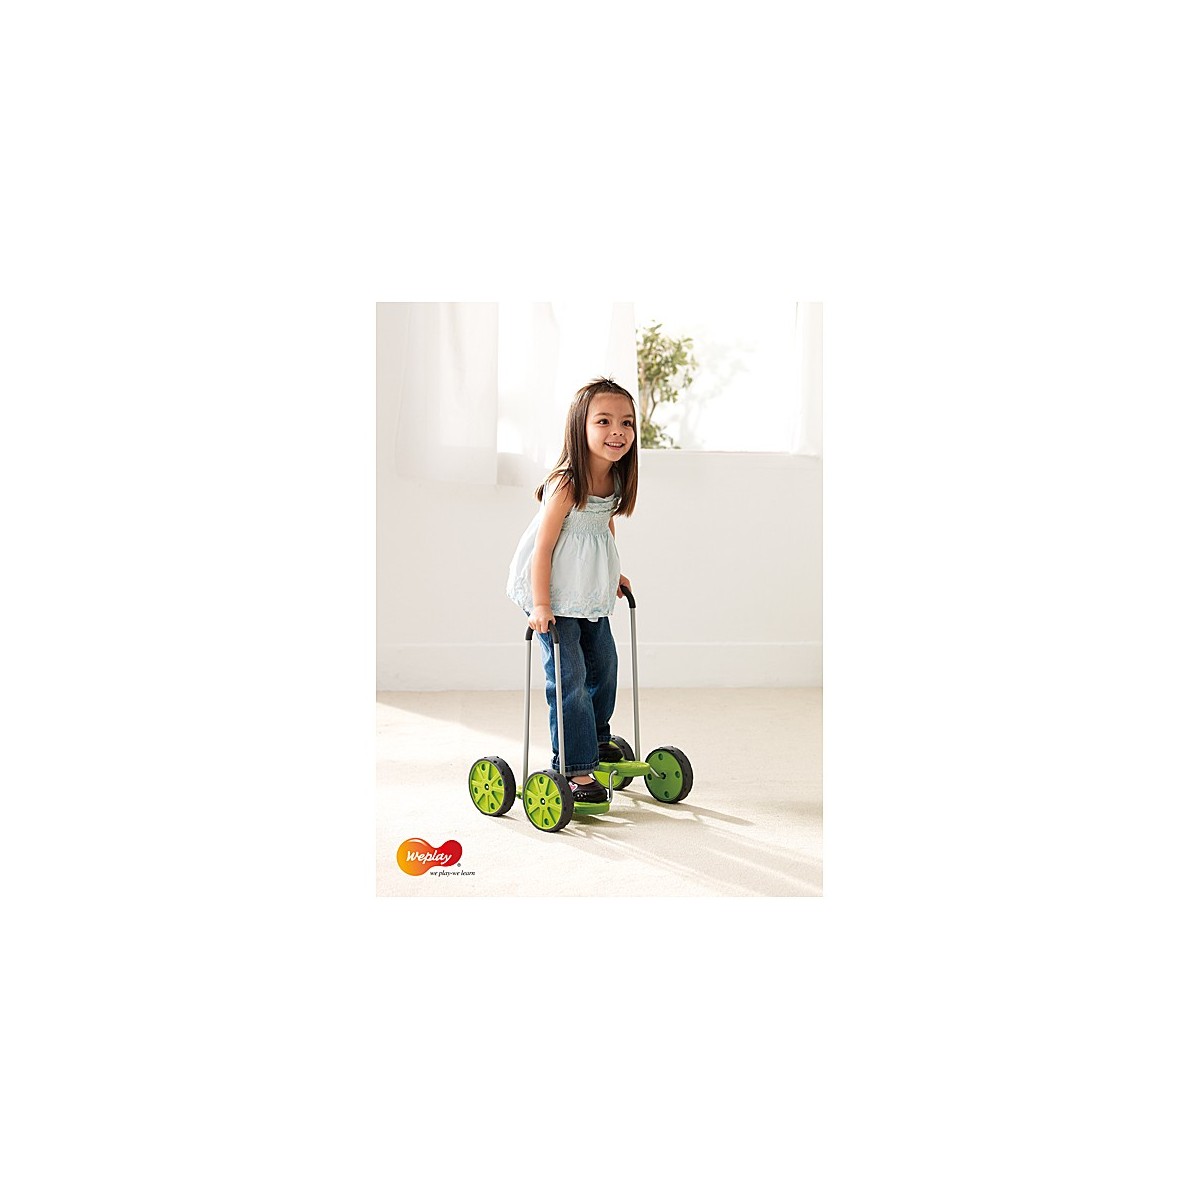 Peda-roller roulant pour enfant - 2